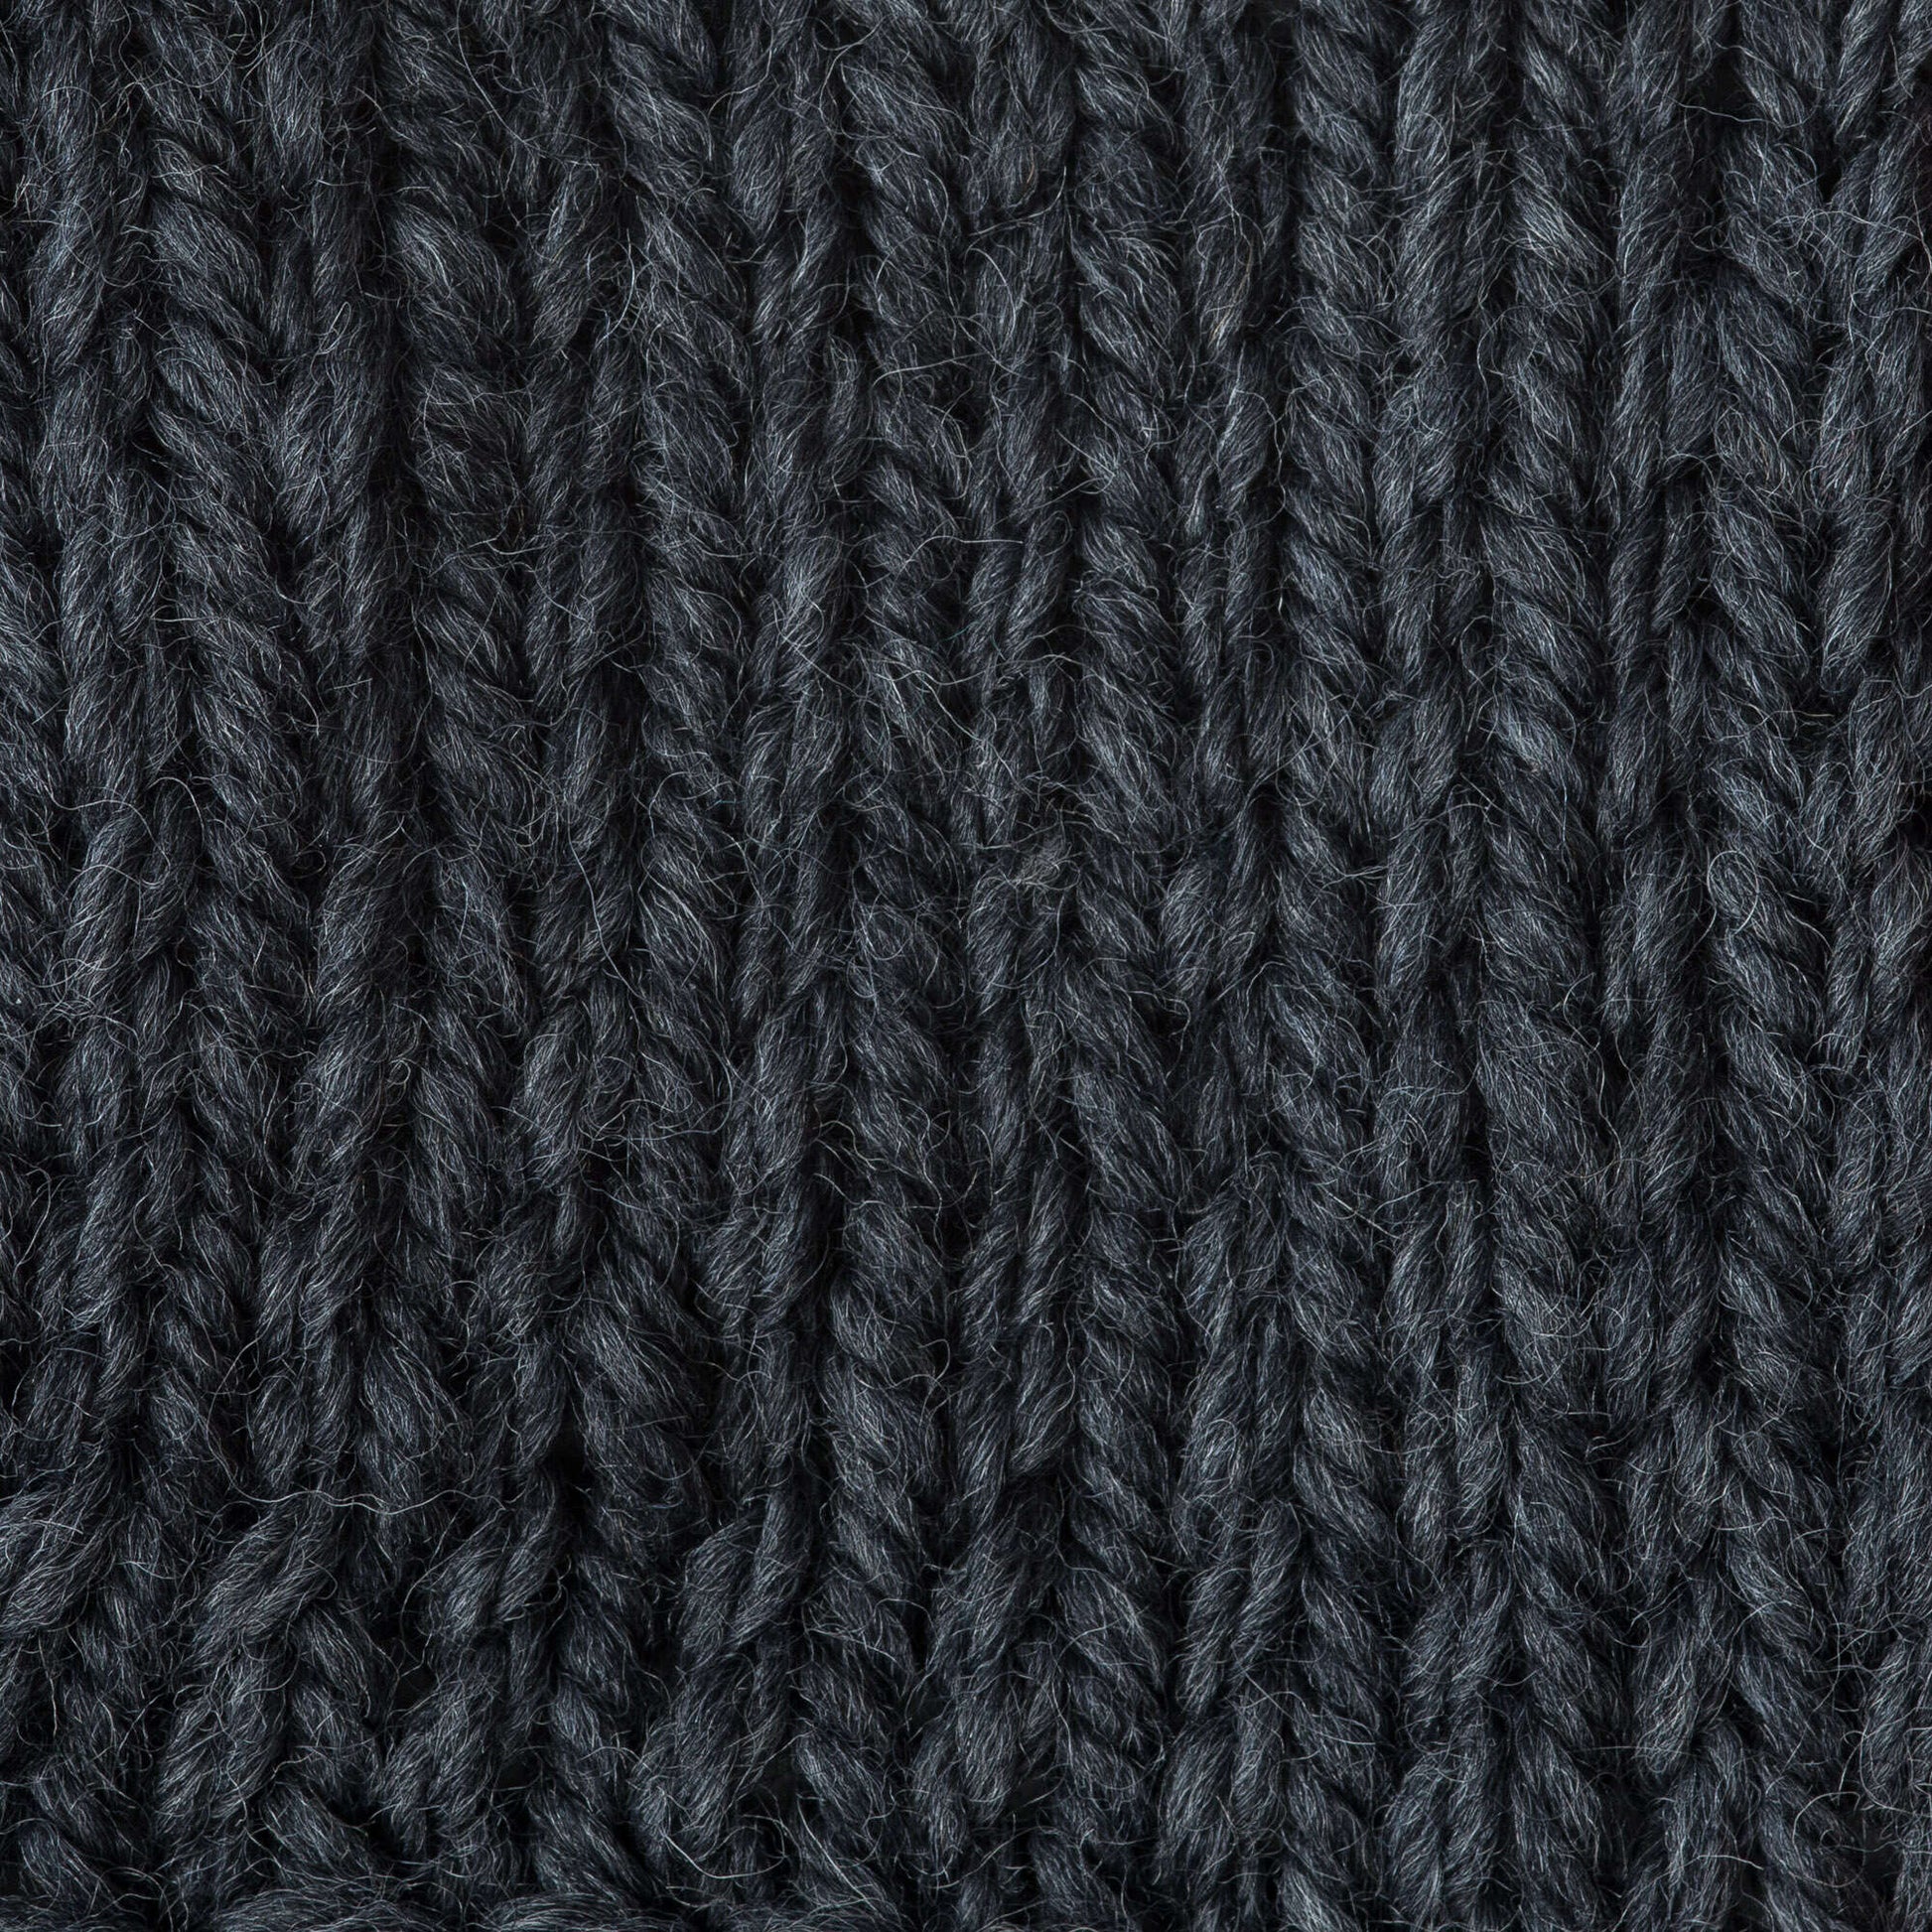 Patons Classic Wool Bulky Yarn - Discontinued Shades Dark Gray Heather